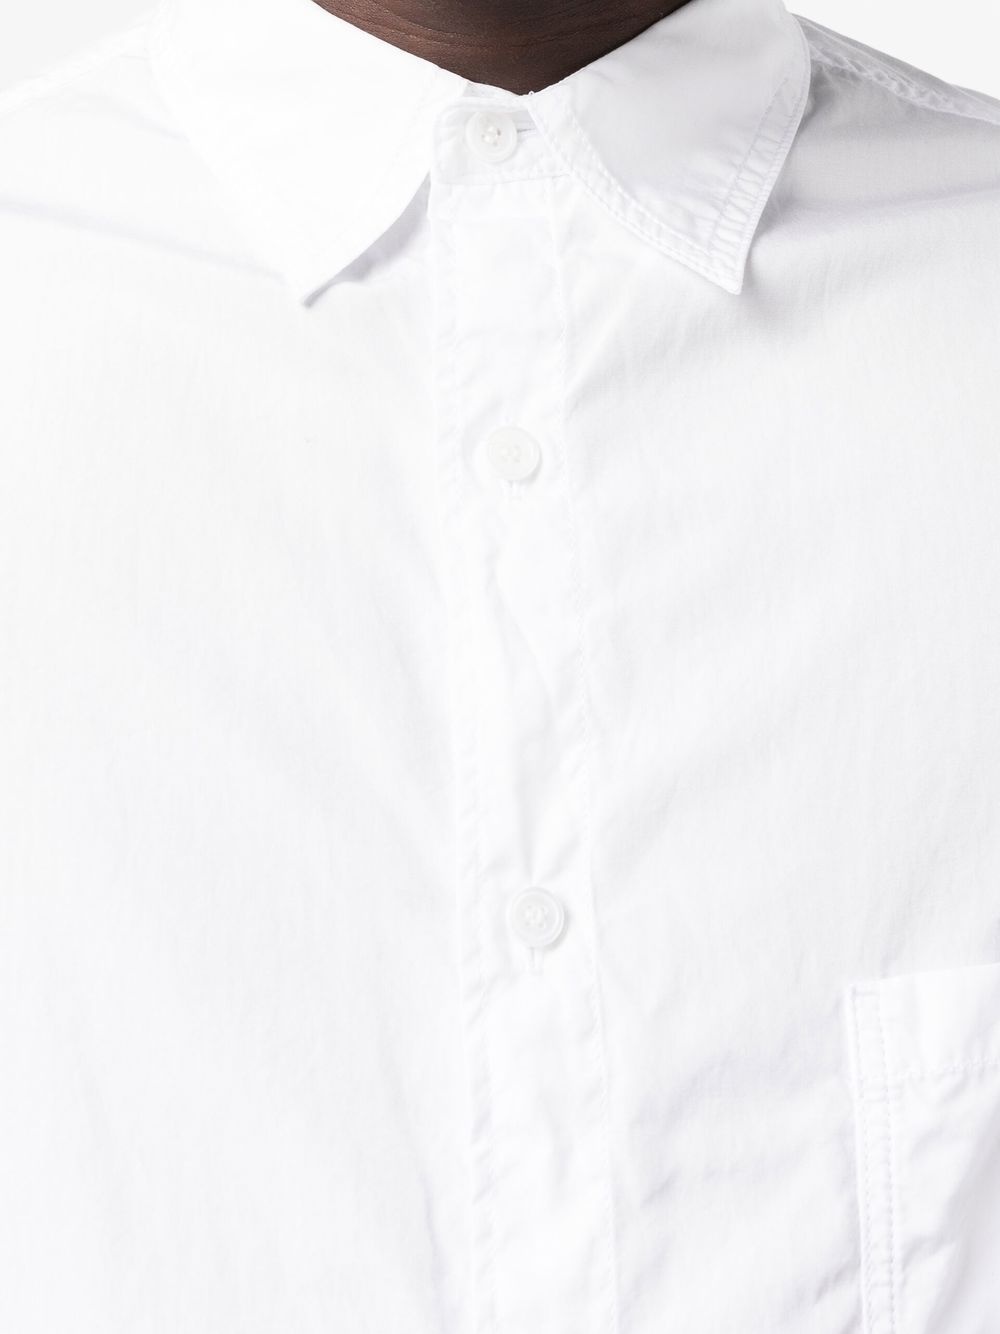 long-line style poplin shirt - 5